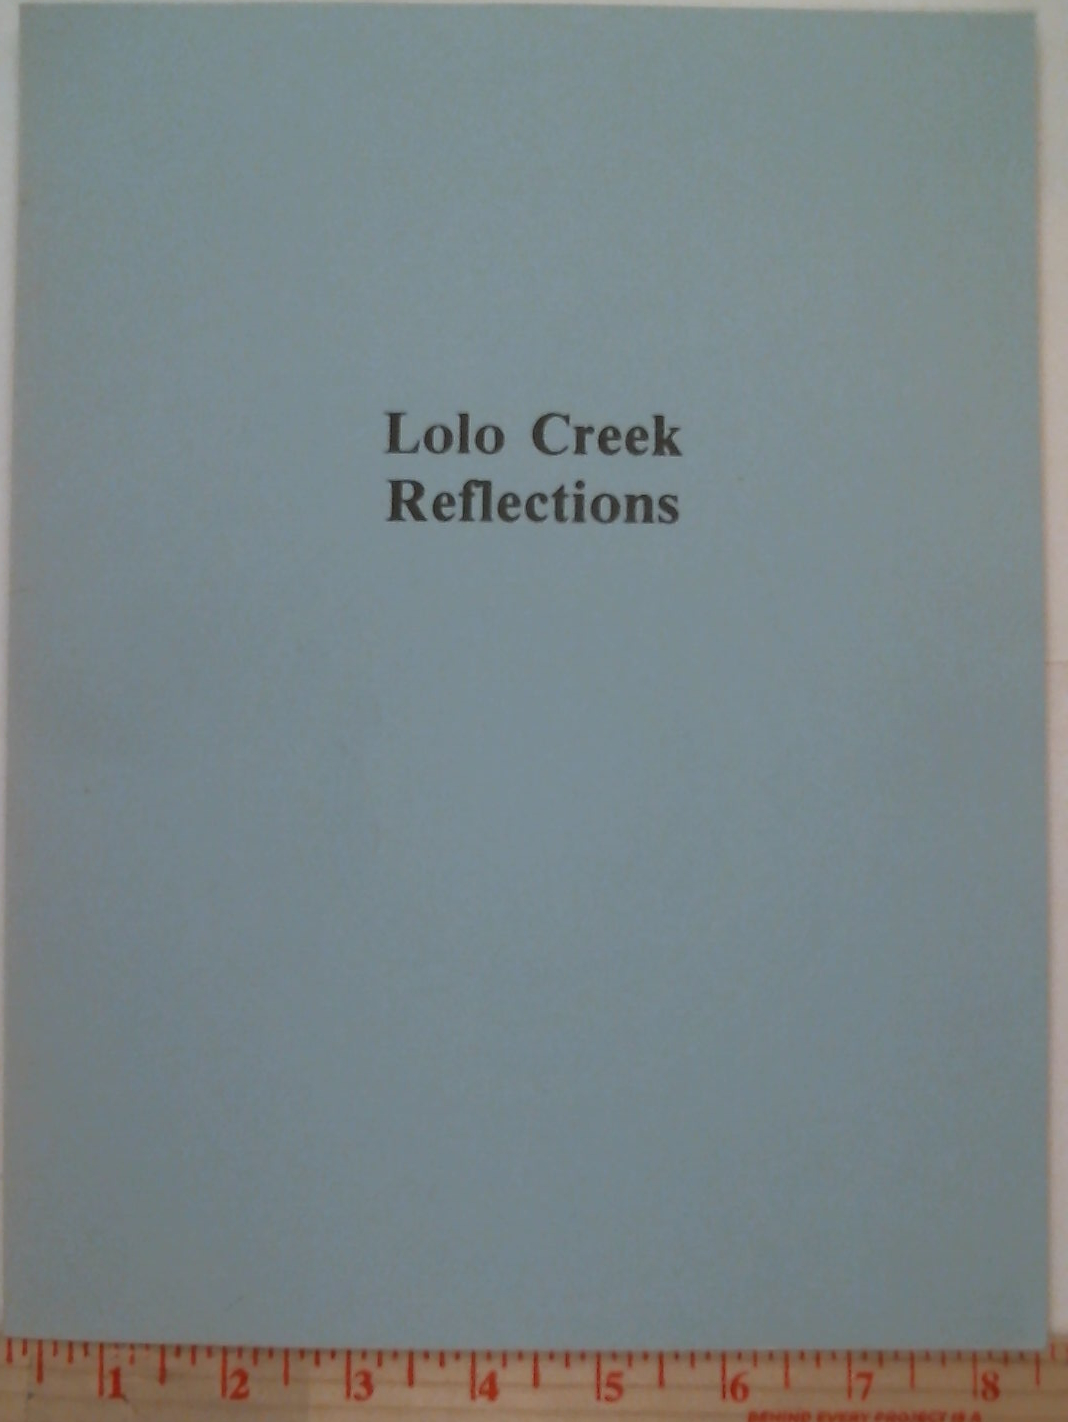 Lolo Creek Reflections